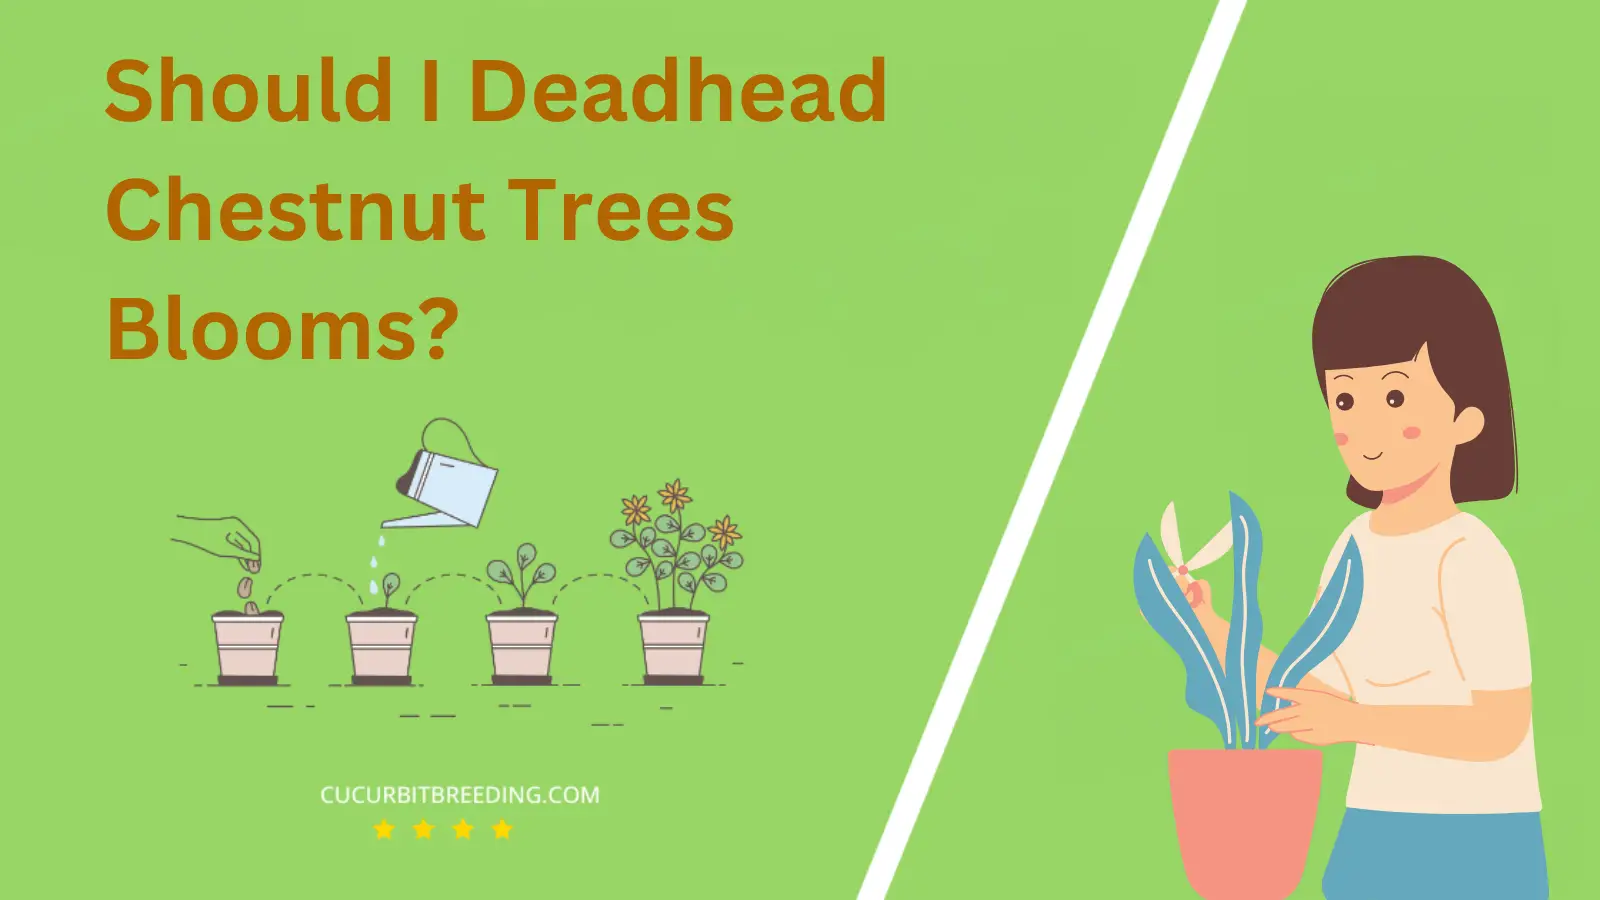 Should I Deadhead Chestnut Trees Blooms?